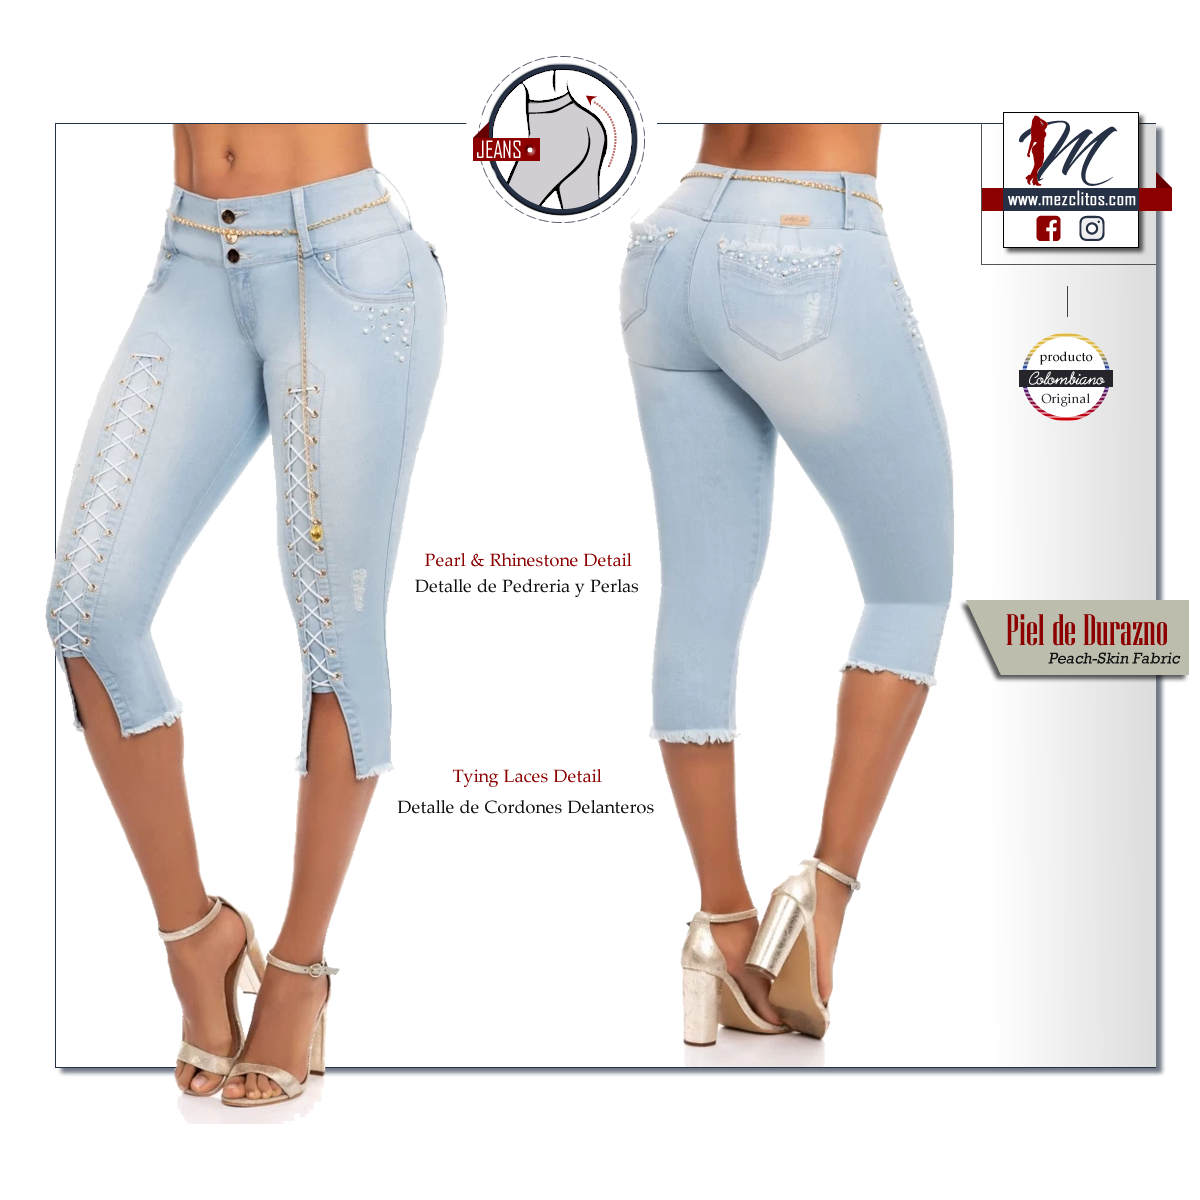 Ene2 Capri Jeans 903779 - 100% Colombiano